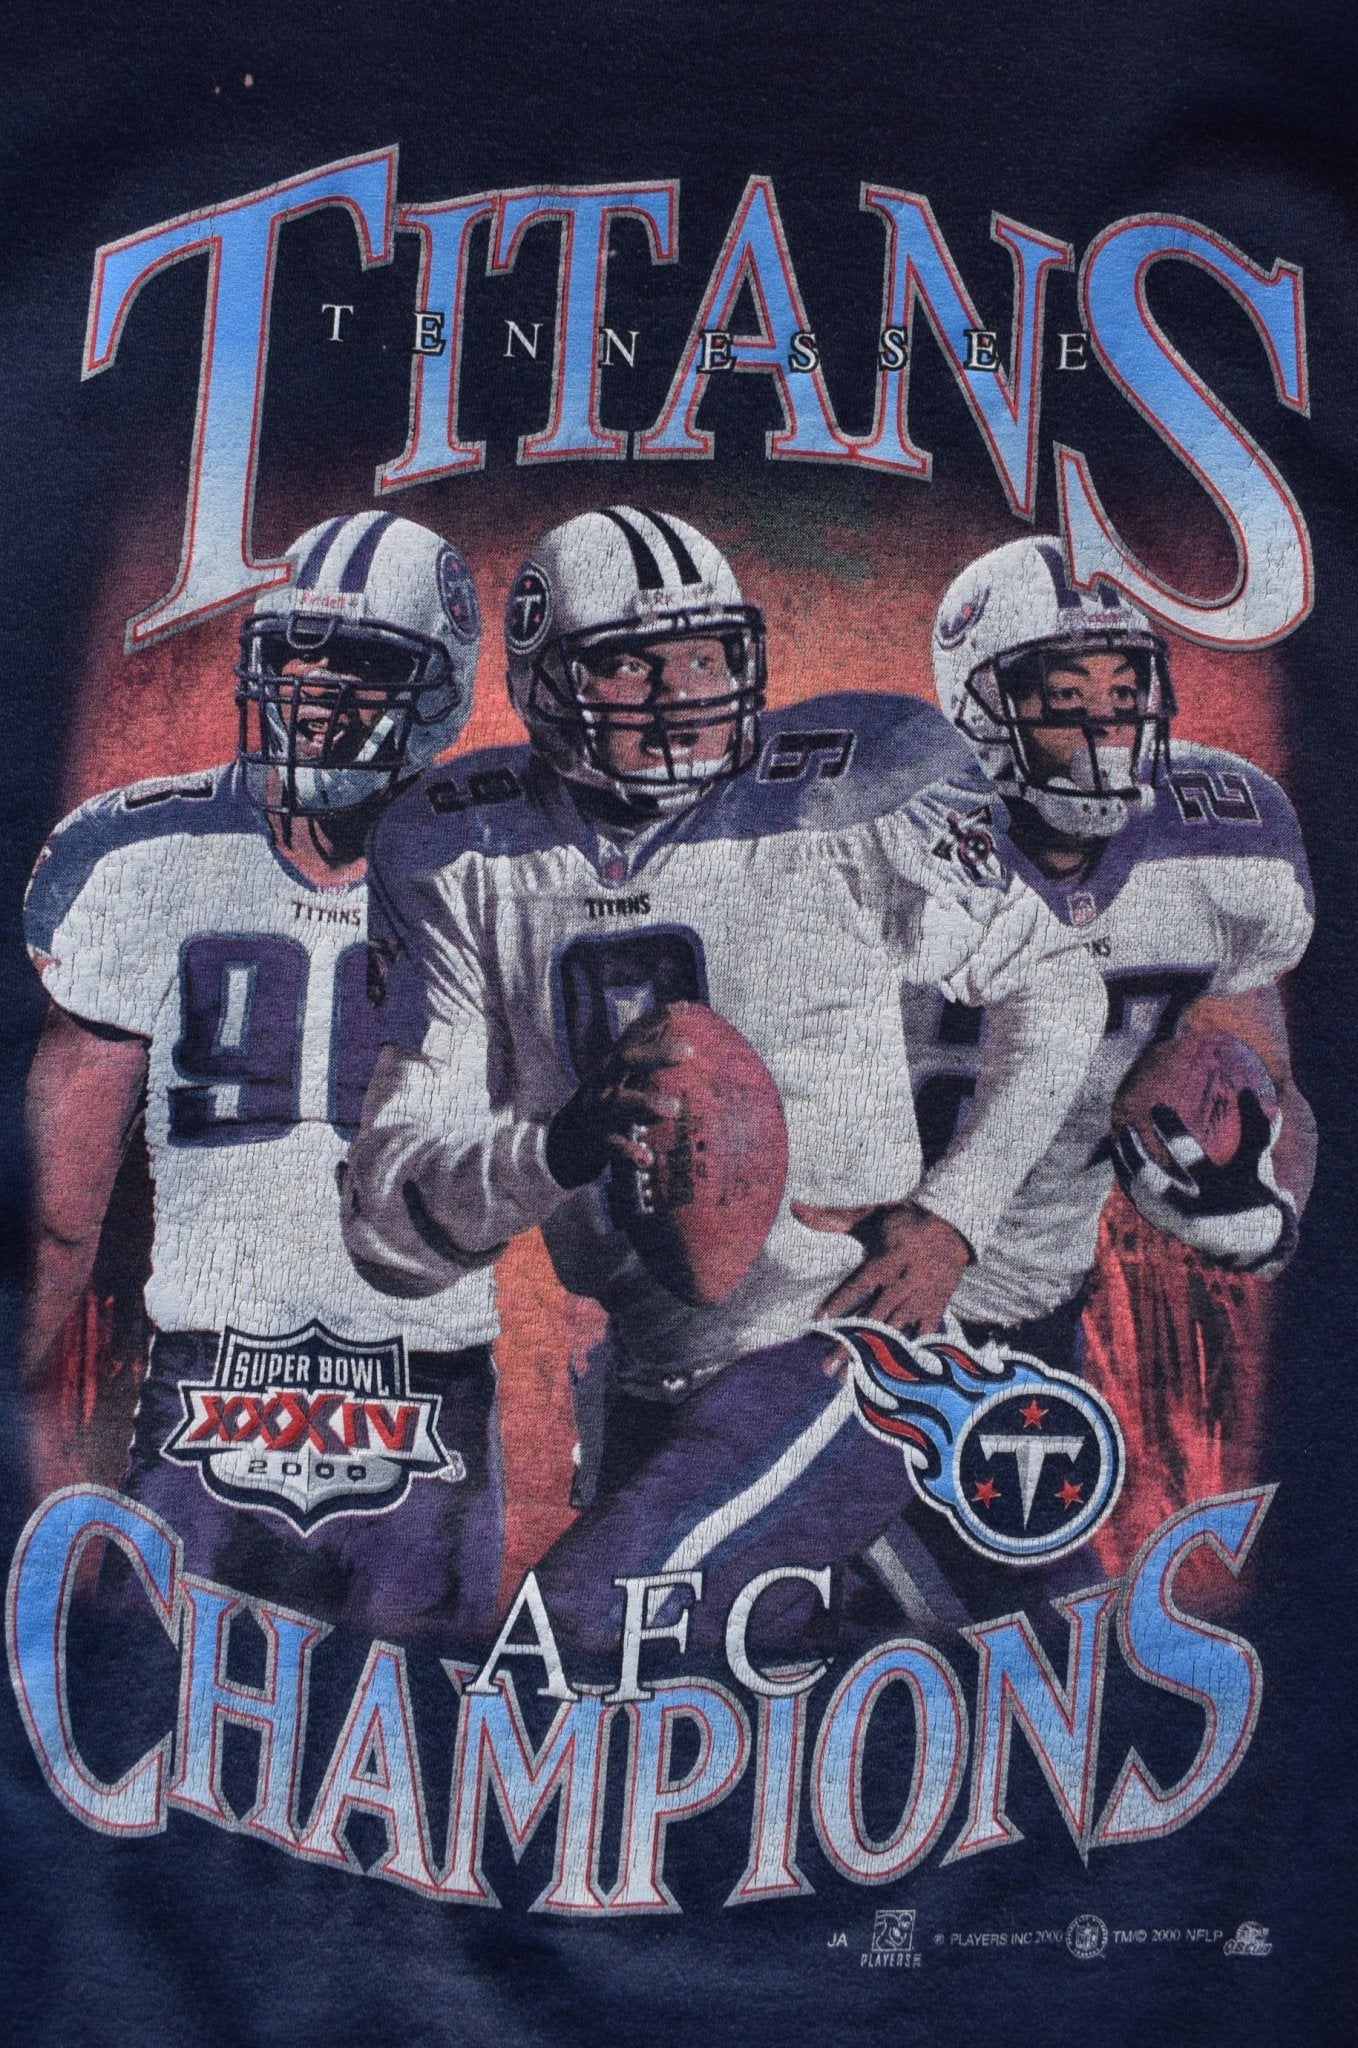 Vintage 2000 NFL Tennessee Titans AFC Champions Tee (XXL) - Retrospective Store